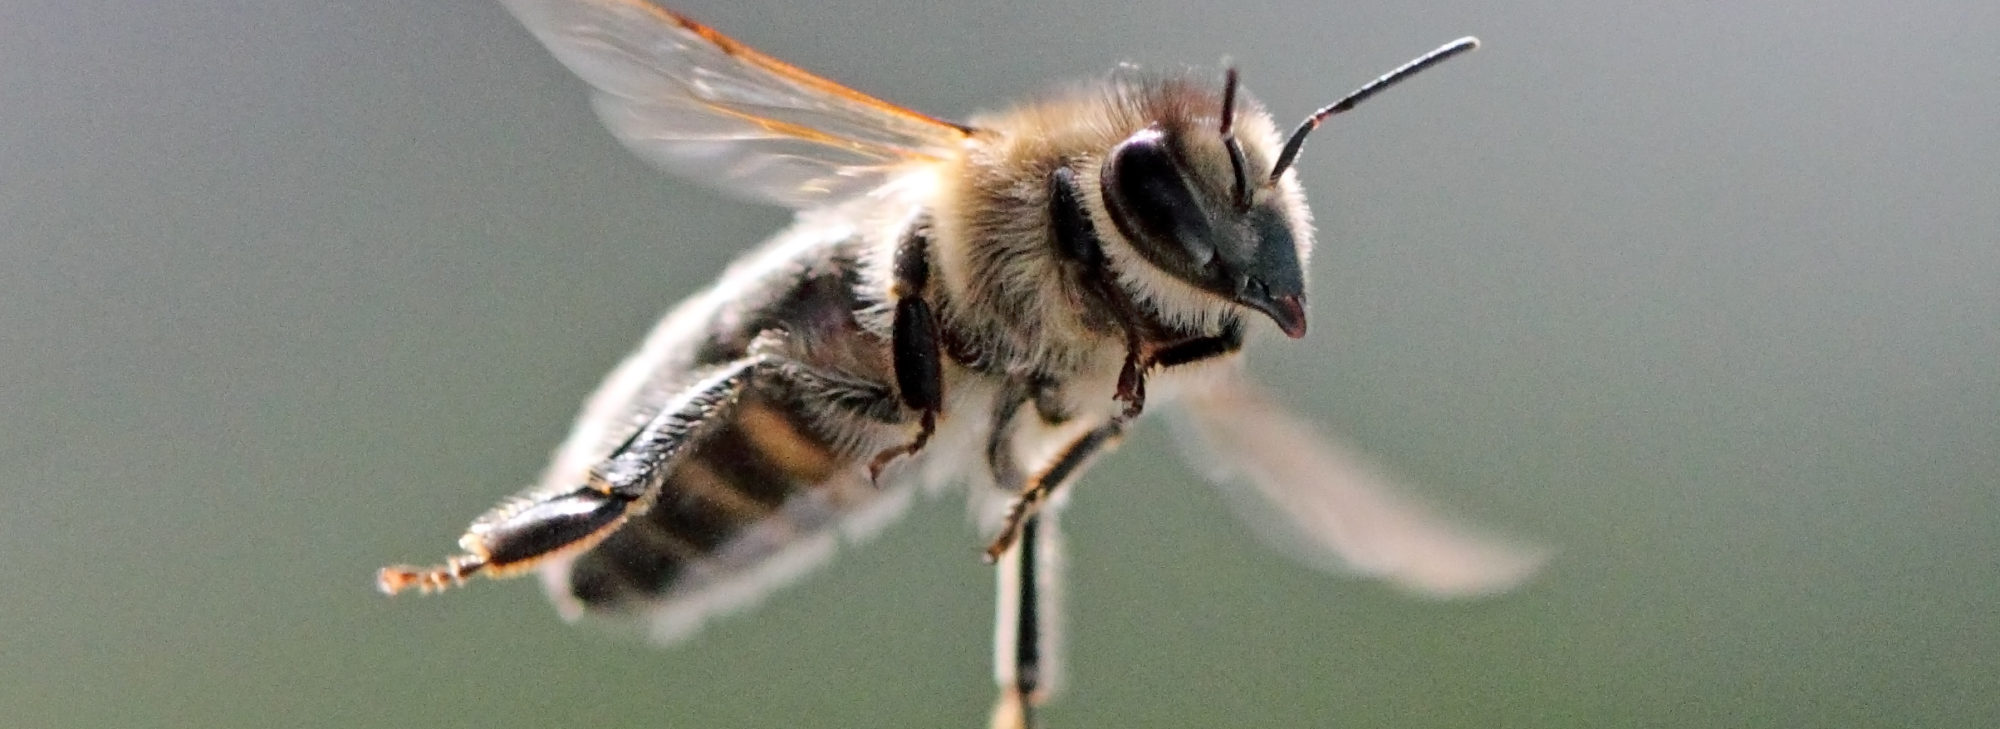 Johnston County Beekeepers Association